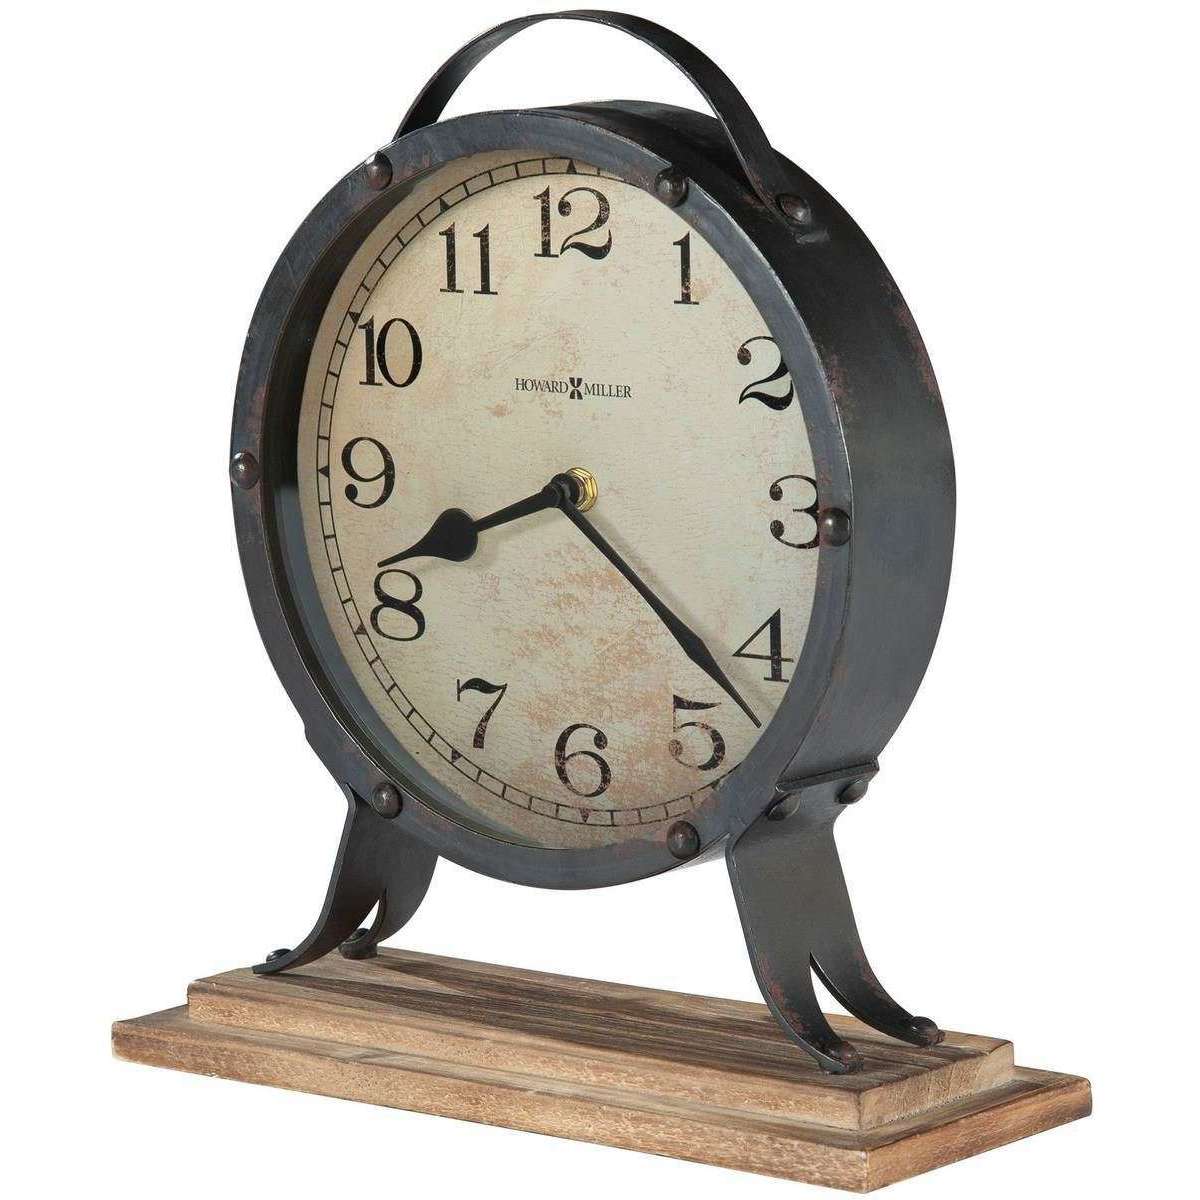 Howard Miller Gravelyn Mantel Clock - Antique Black